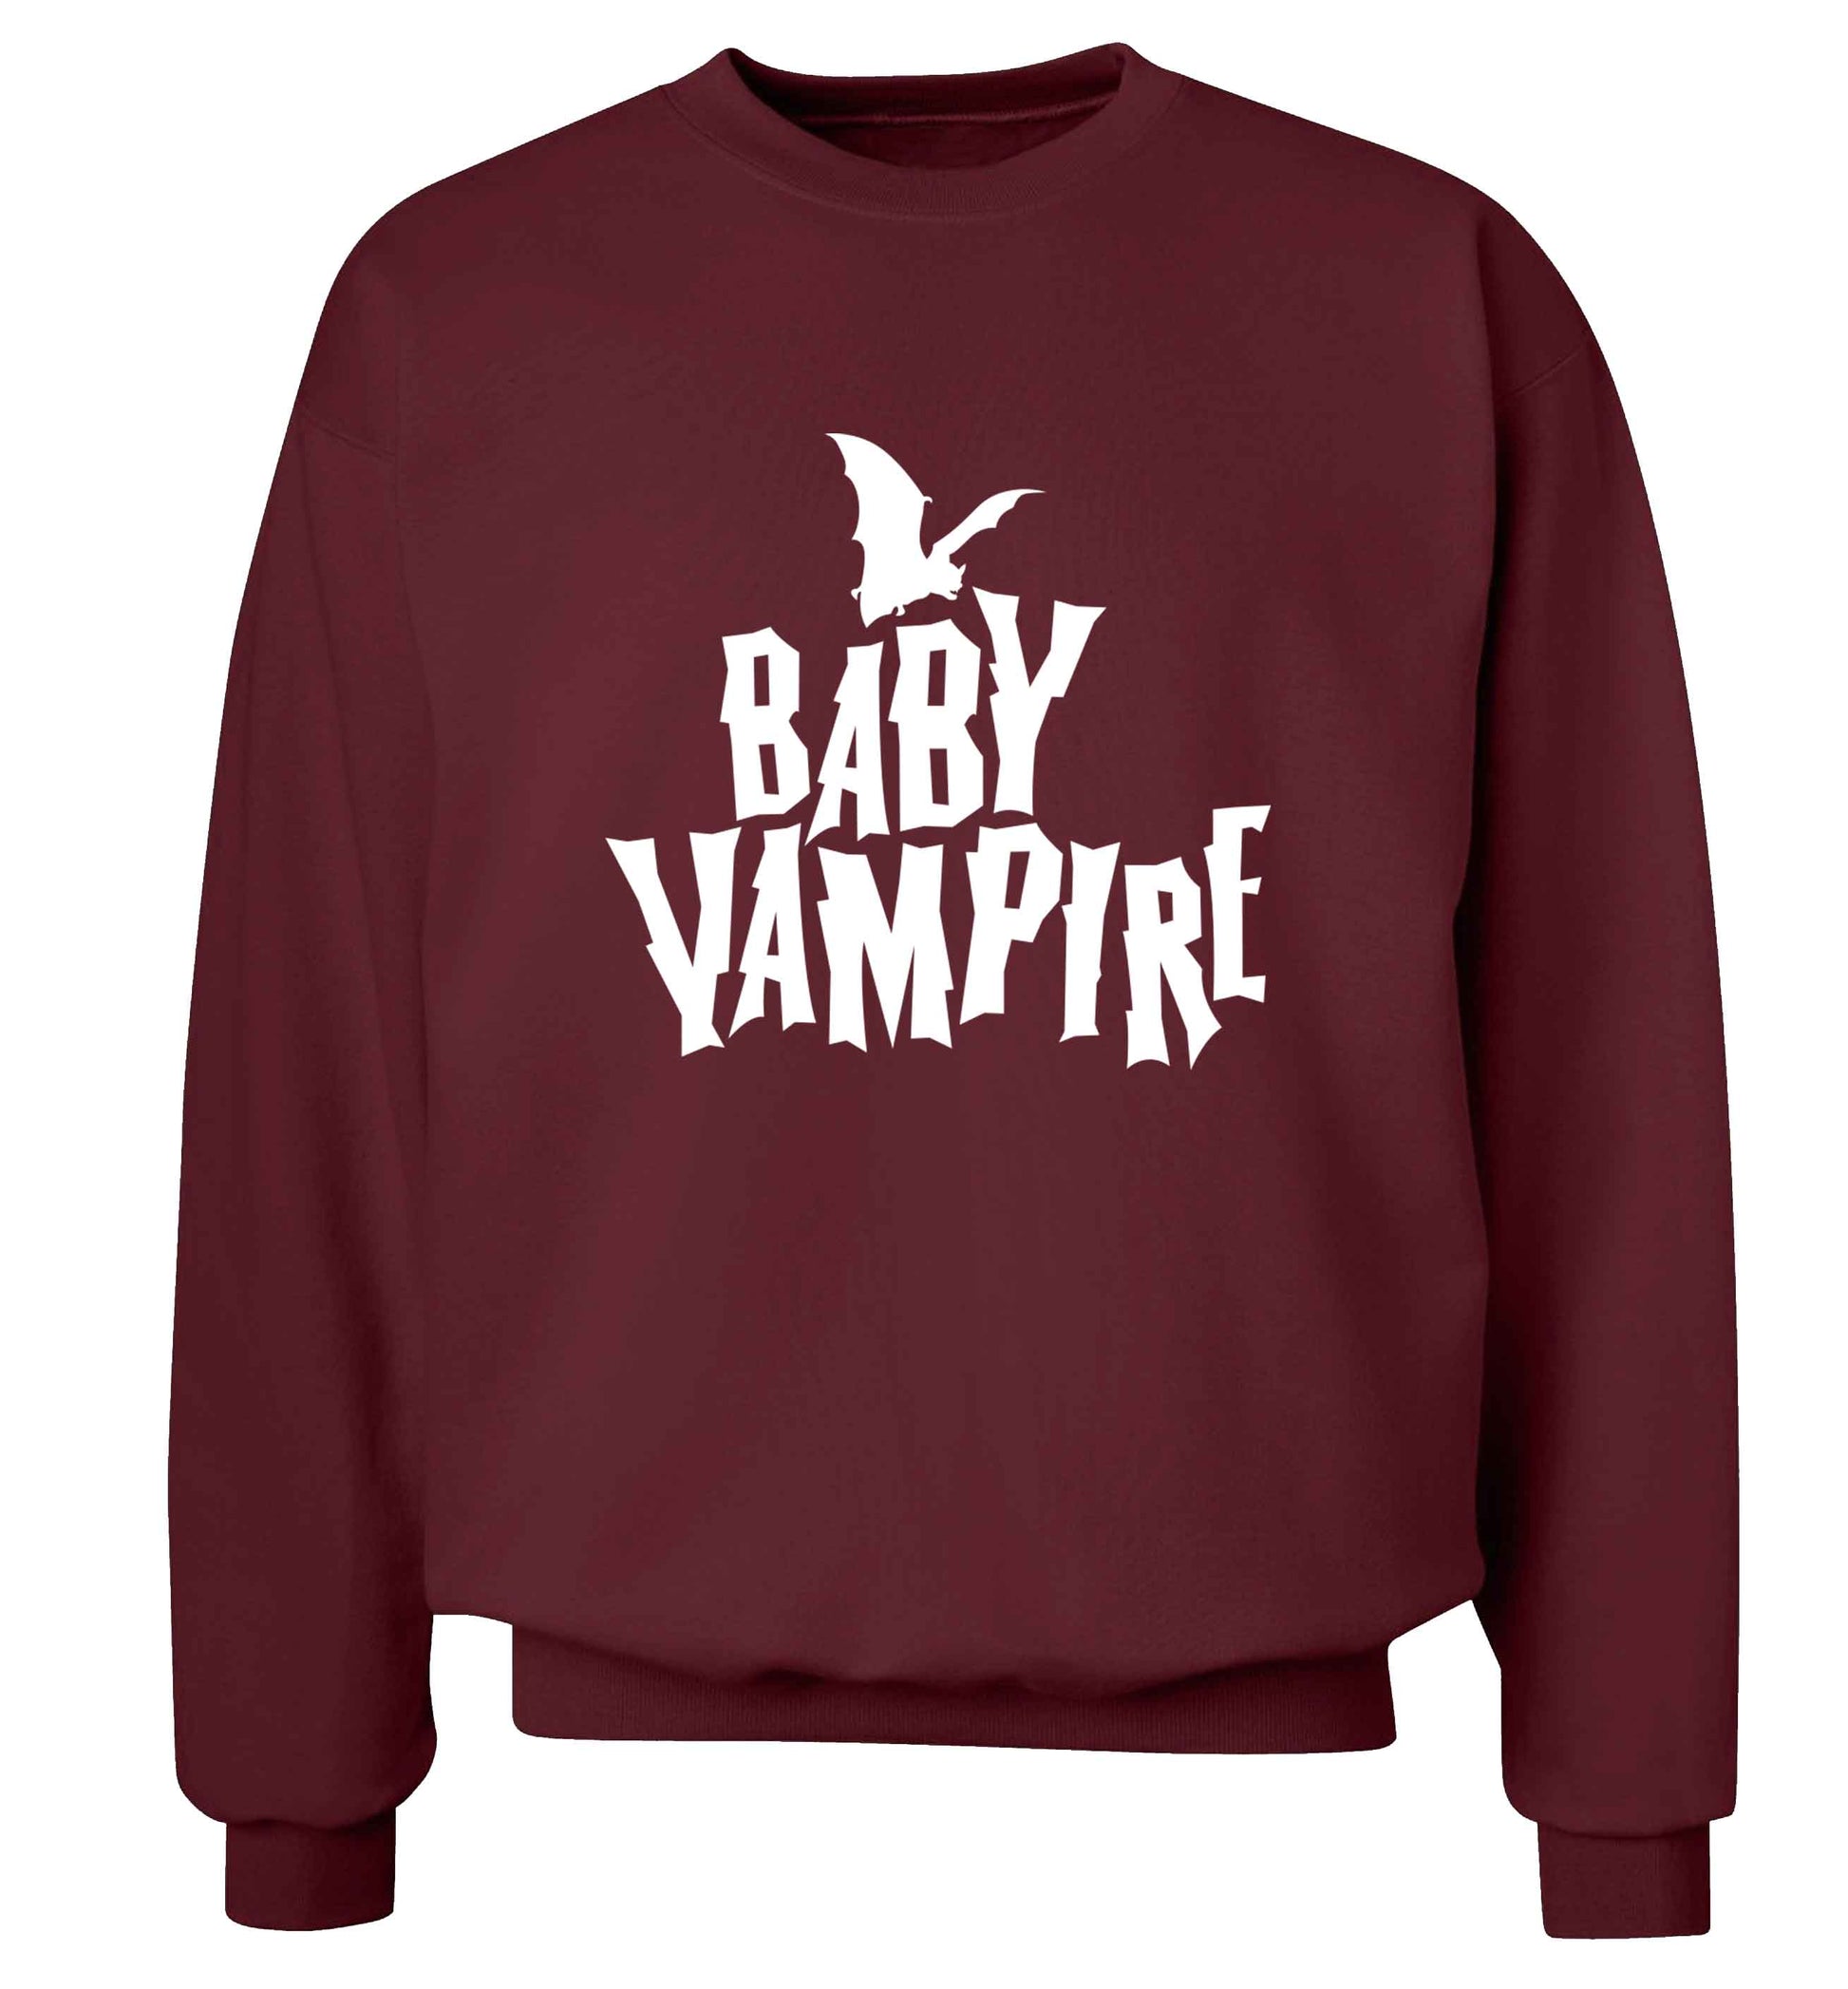 Baby vampire adult's unisex maroon sweater 2XL